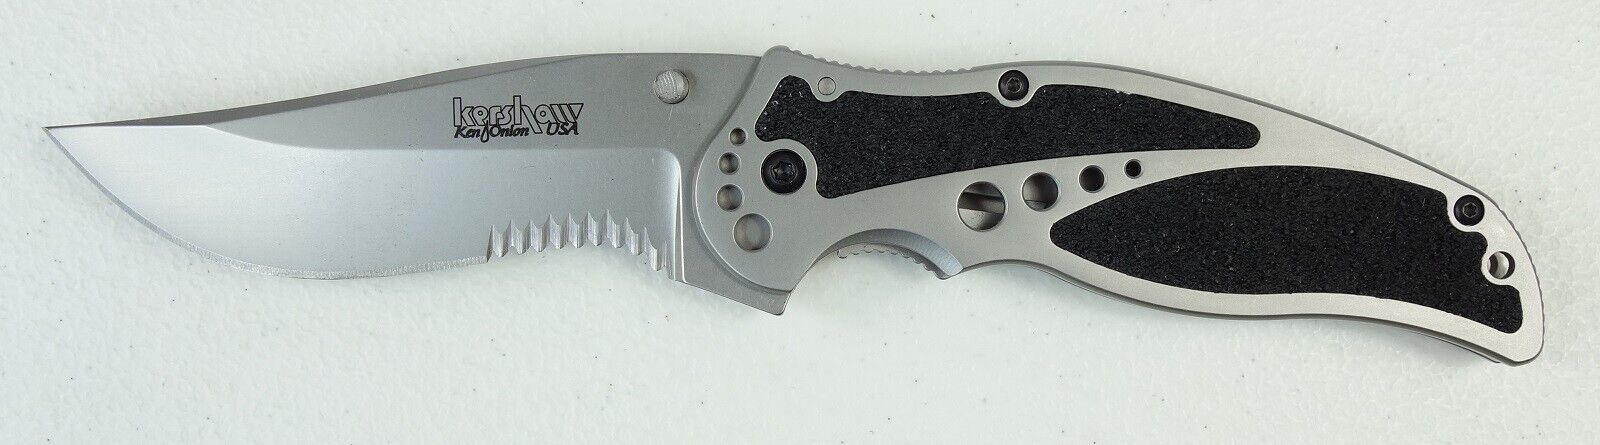 Kershaw Storm II Large 1475ST Ken Onion USA Made Folding Knife Discontinued